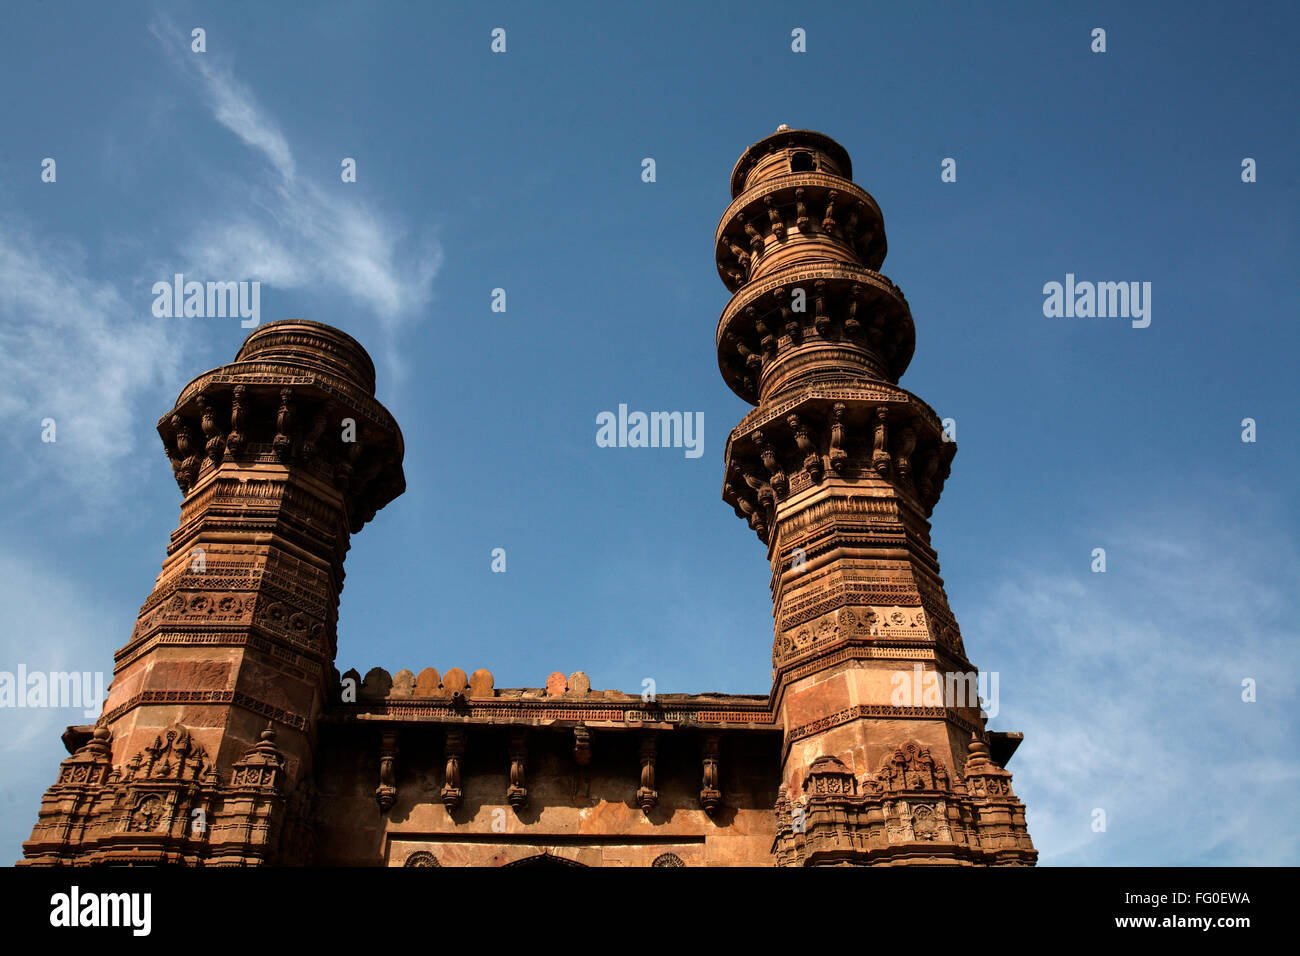 Five hundred seventy one year old shaking minarets of Bibiji mosque in Ahmedabad ; Gujarat ; India heritage Stock Photo